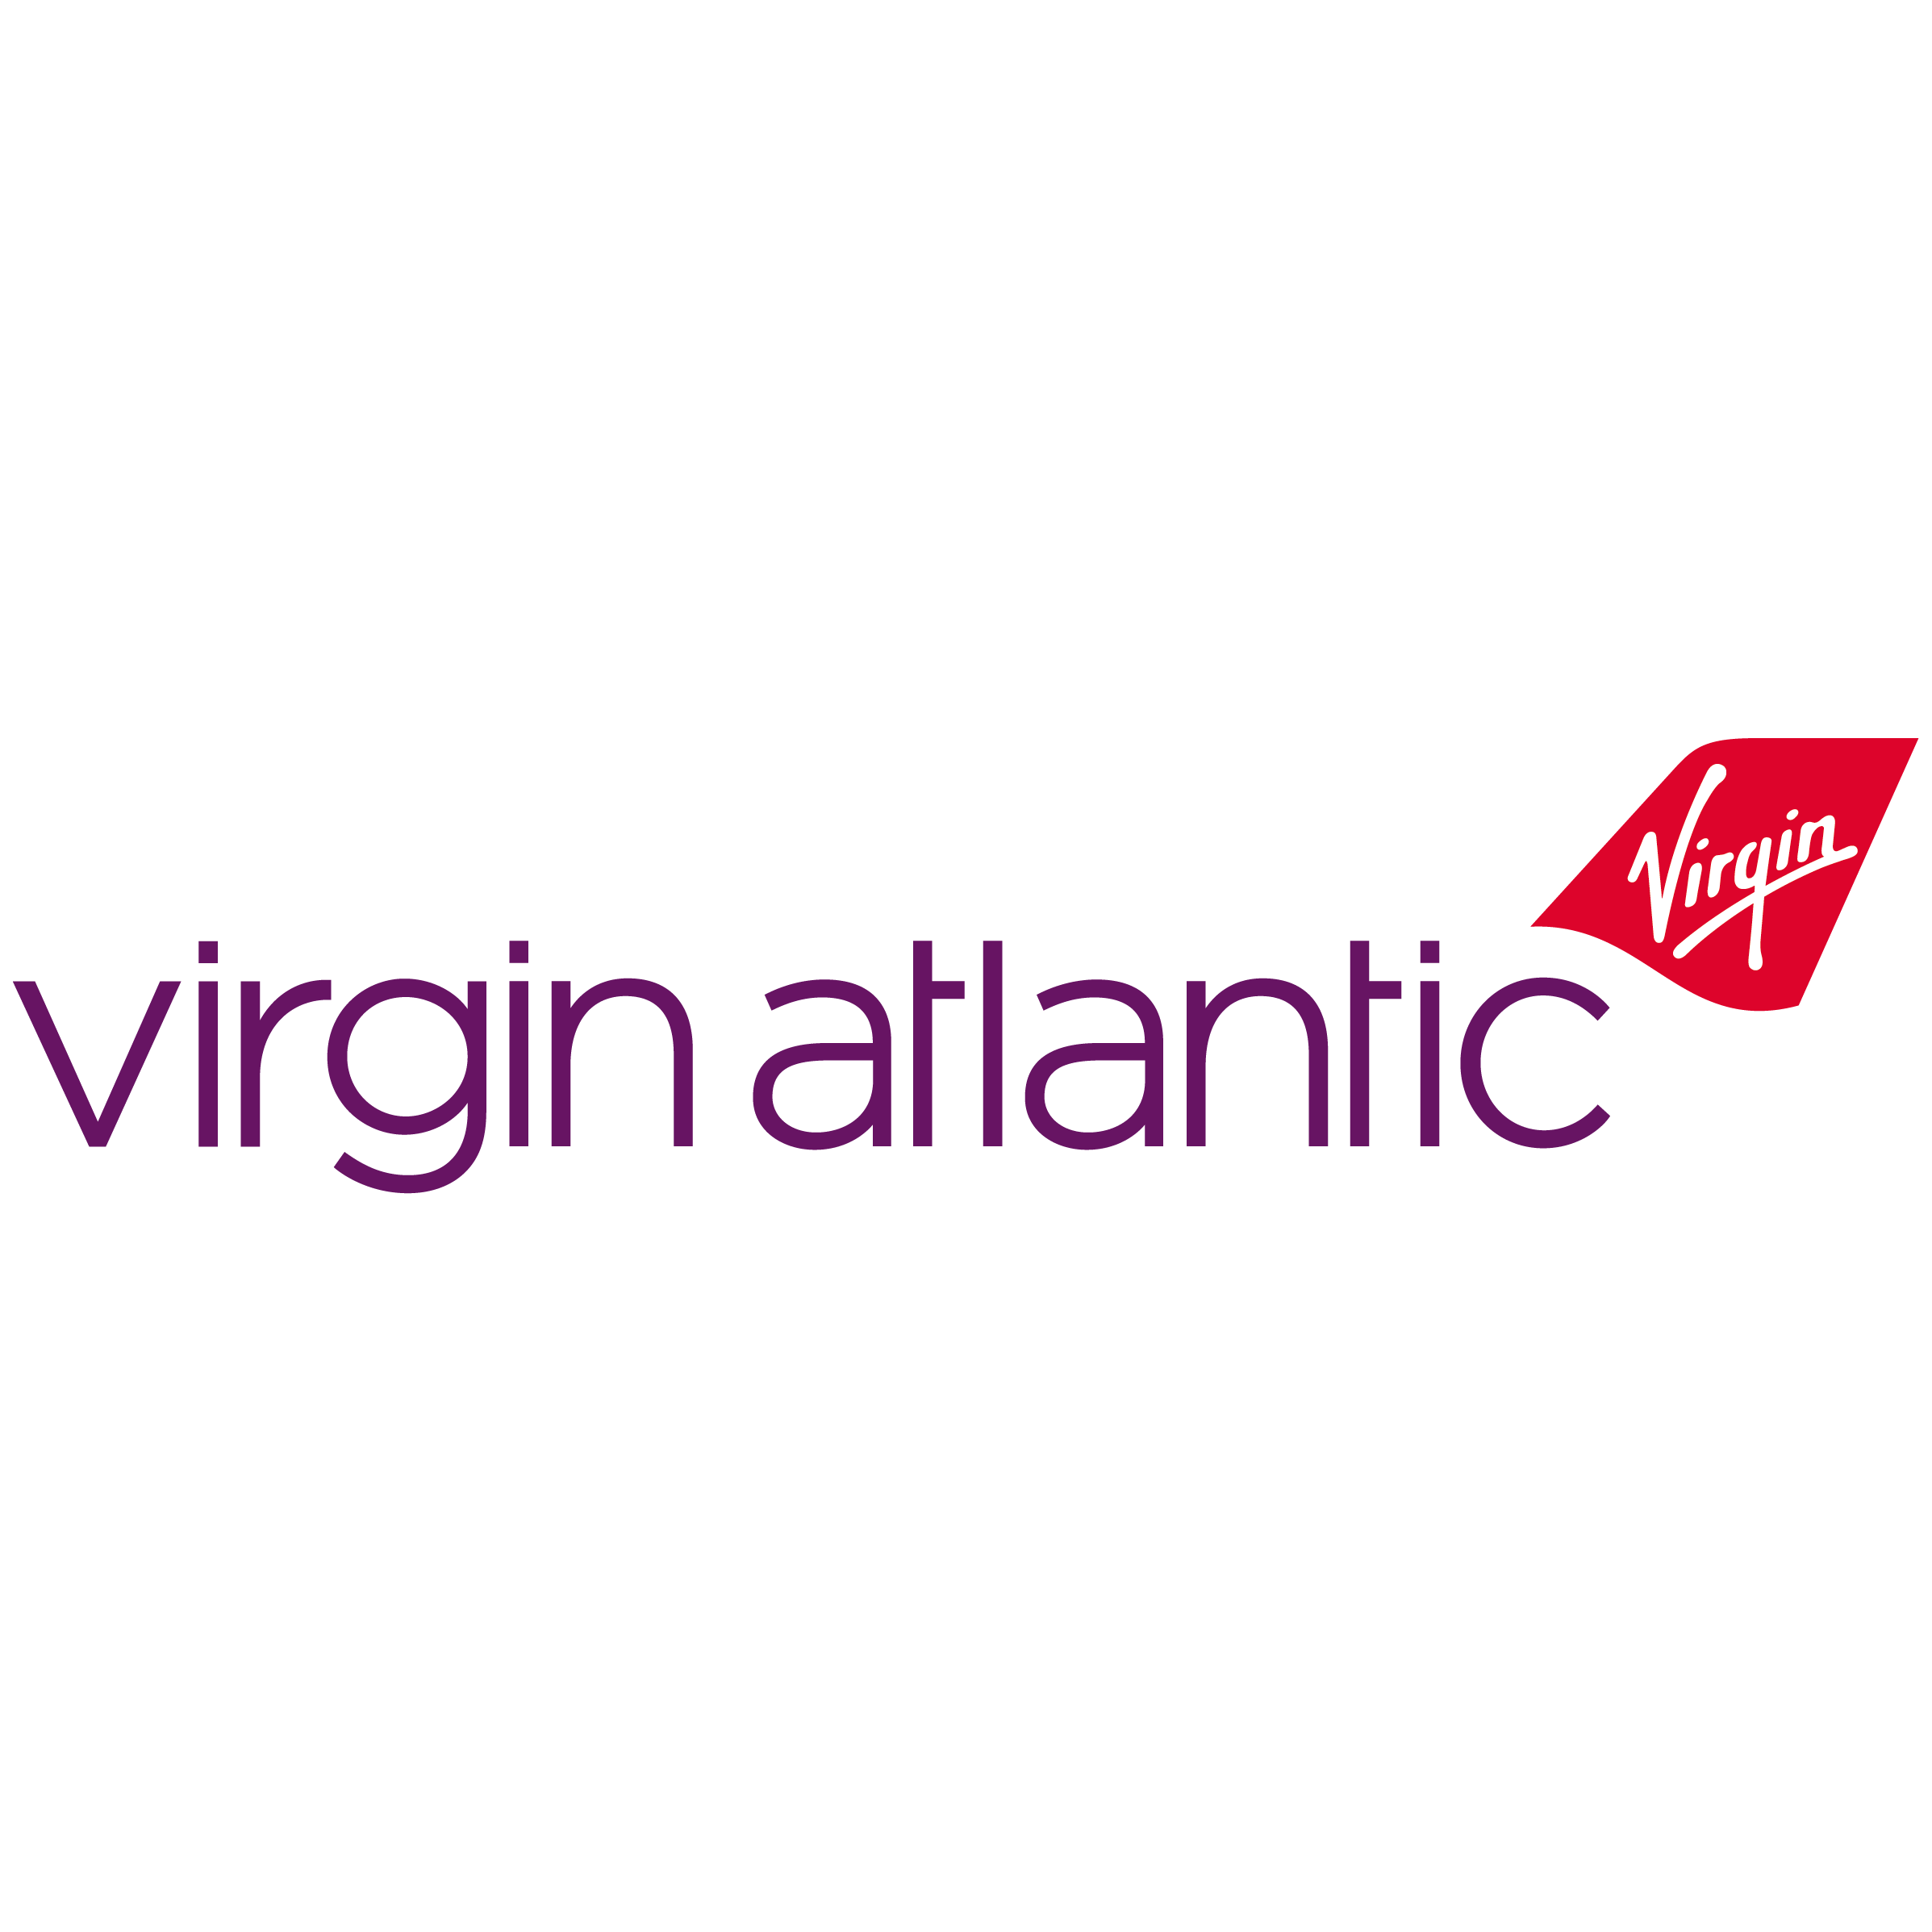 The Virgin Atlantic logo